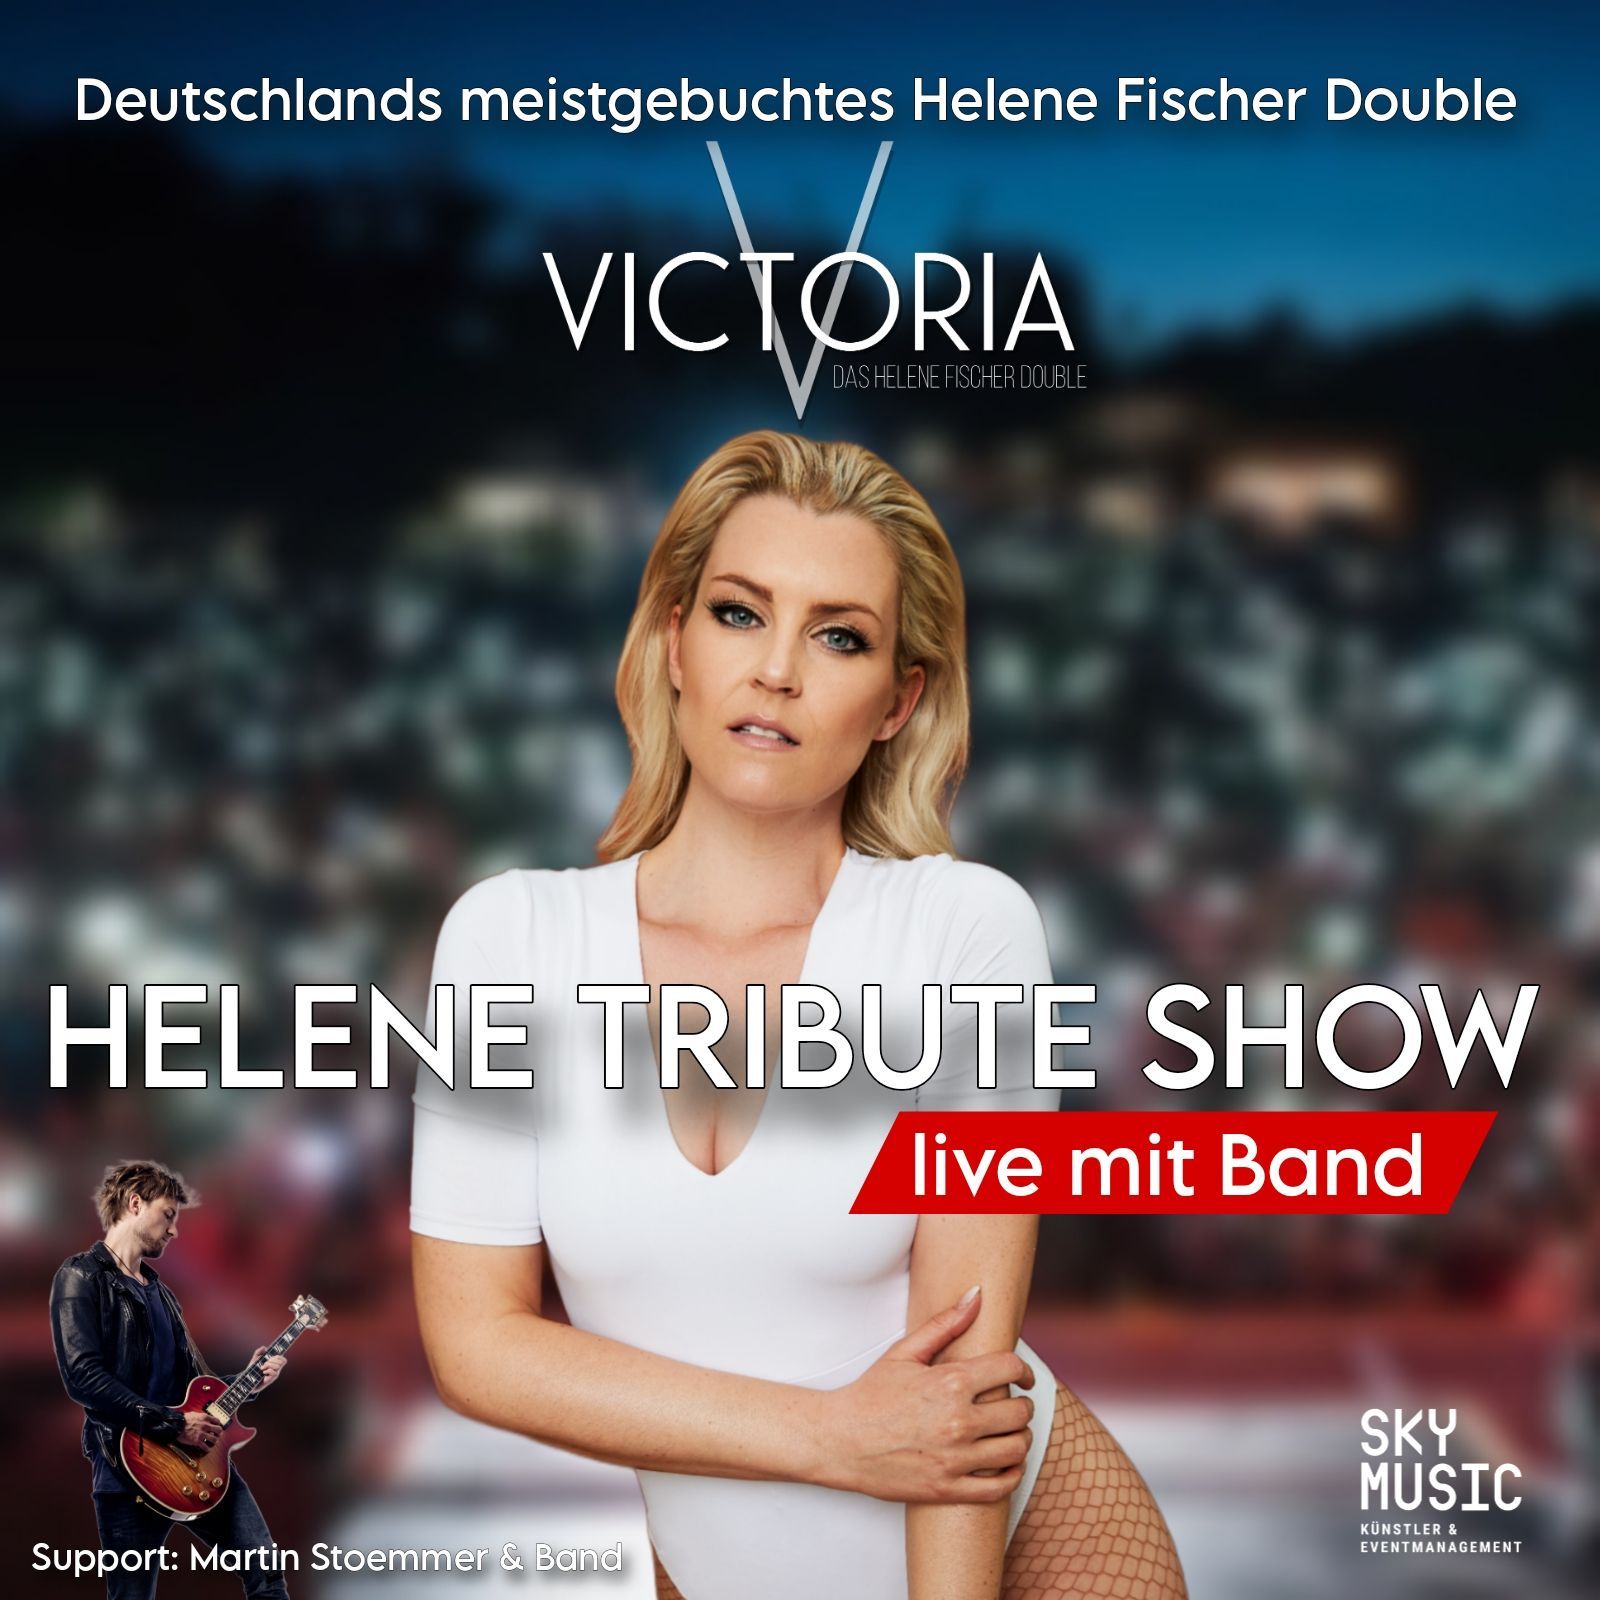 Victoria Helene Tribute show